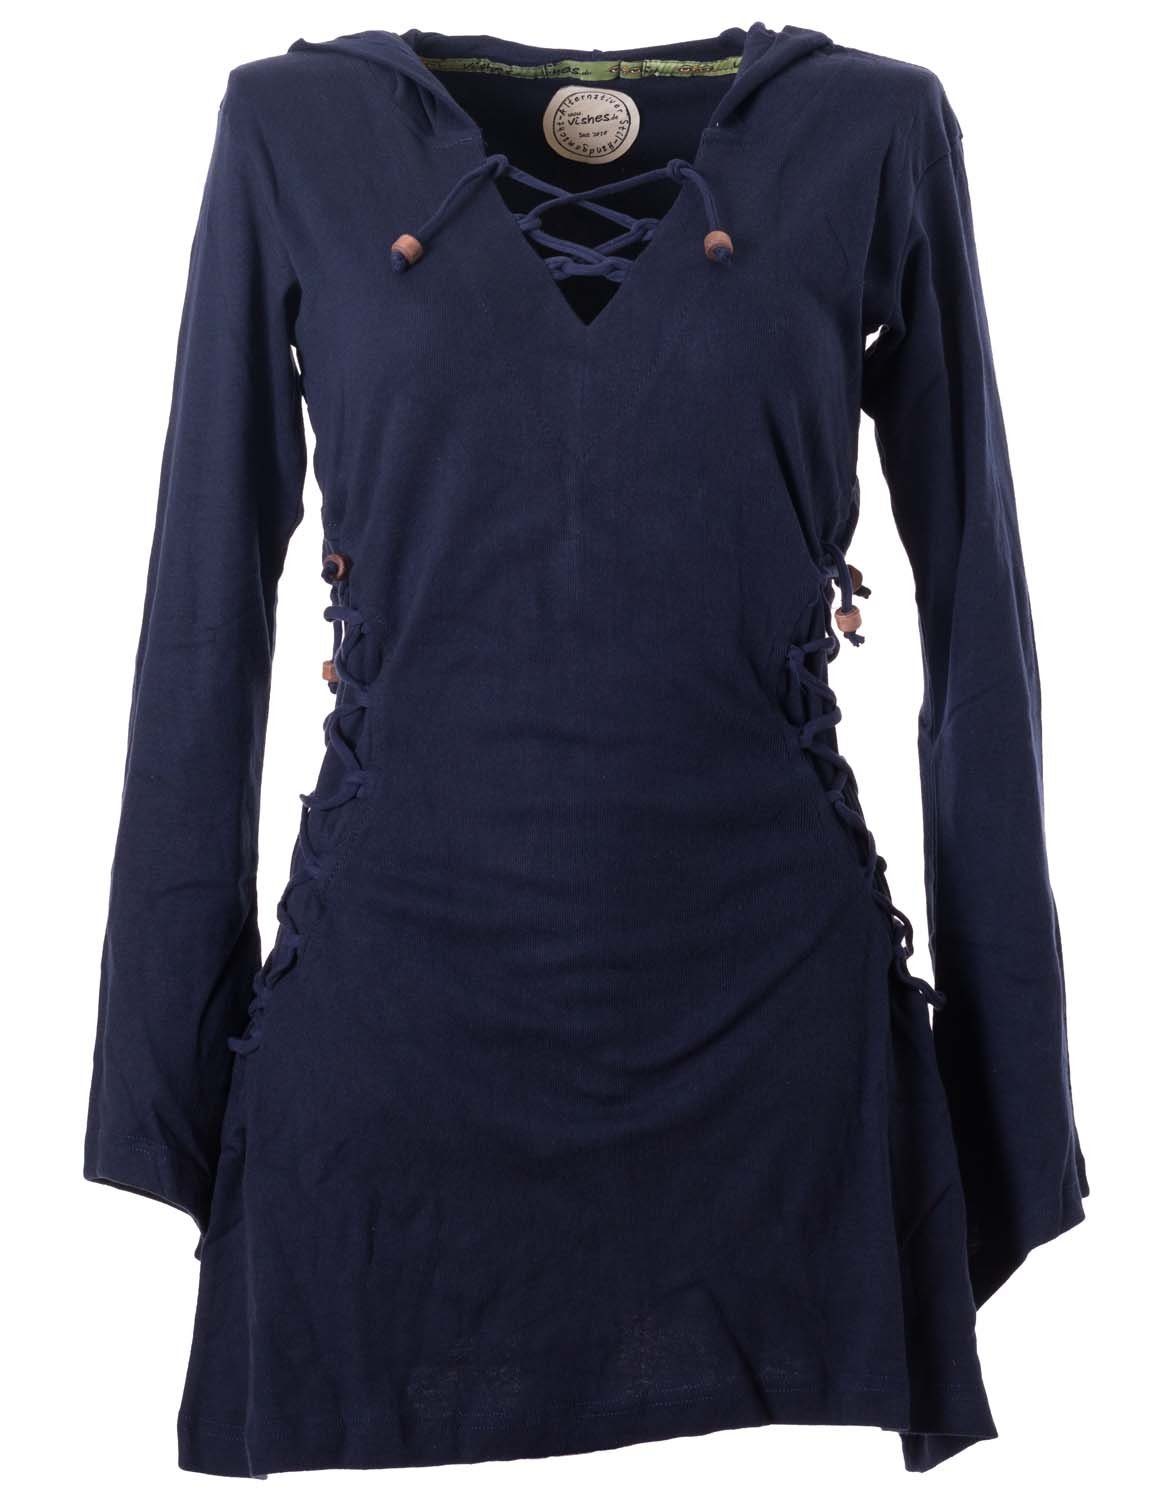 Vishes Zipfelkleid Elfenkleid mit Hoody, Schnüren Zipfelkapuze Style zum Gothik Bändern dunkelblau Ethno